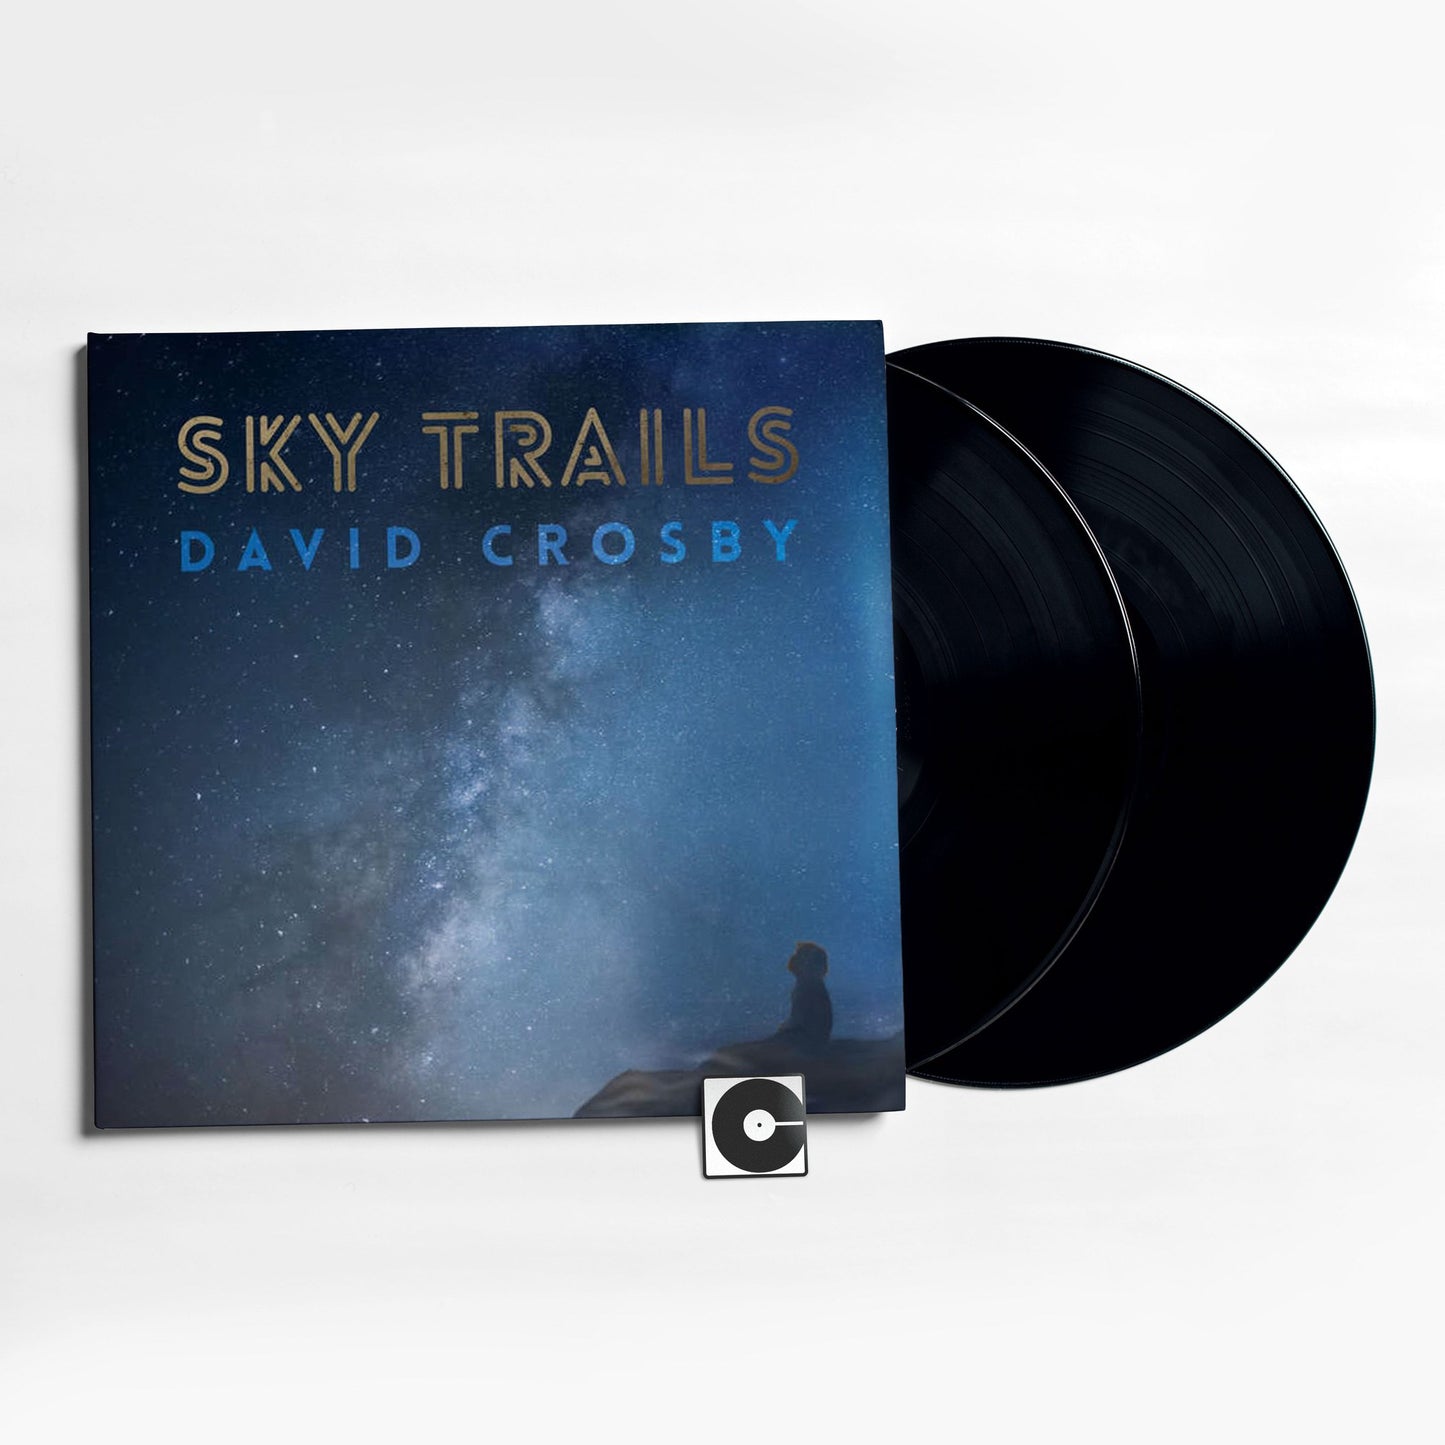 David Crosby - "Sky Trails"